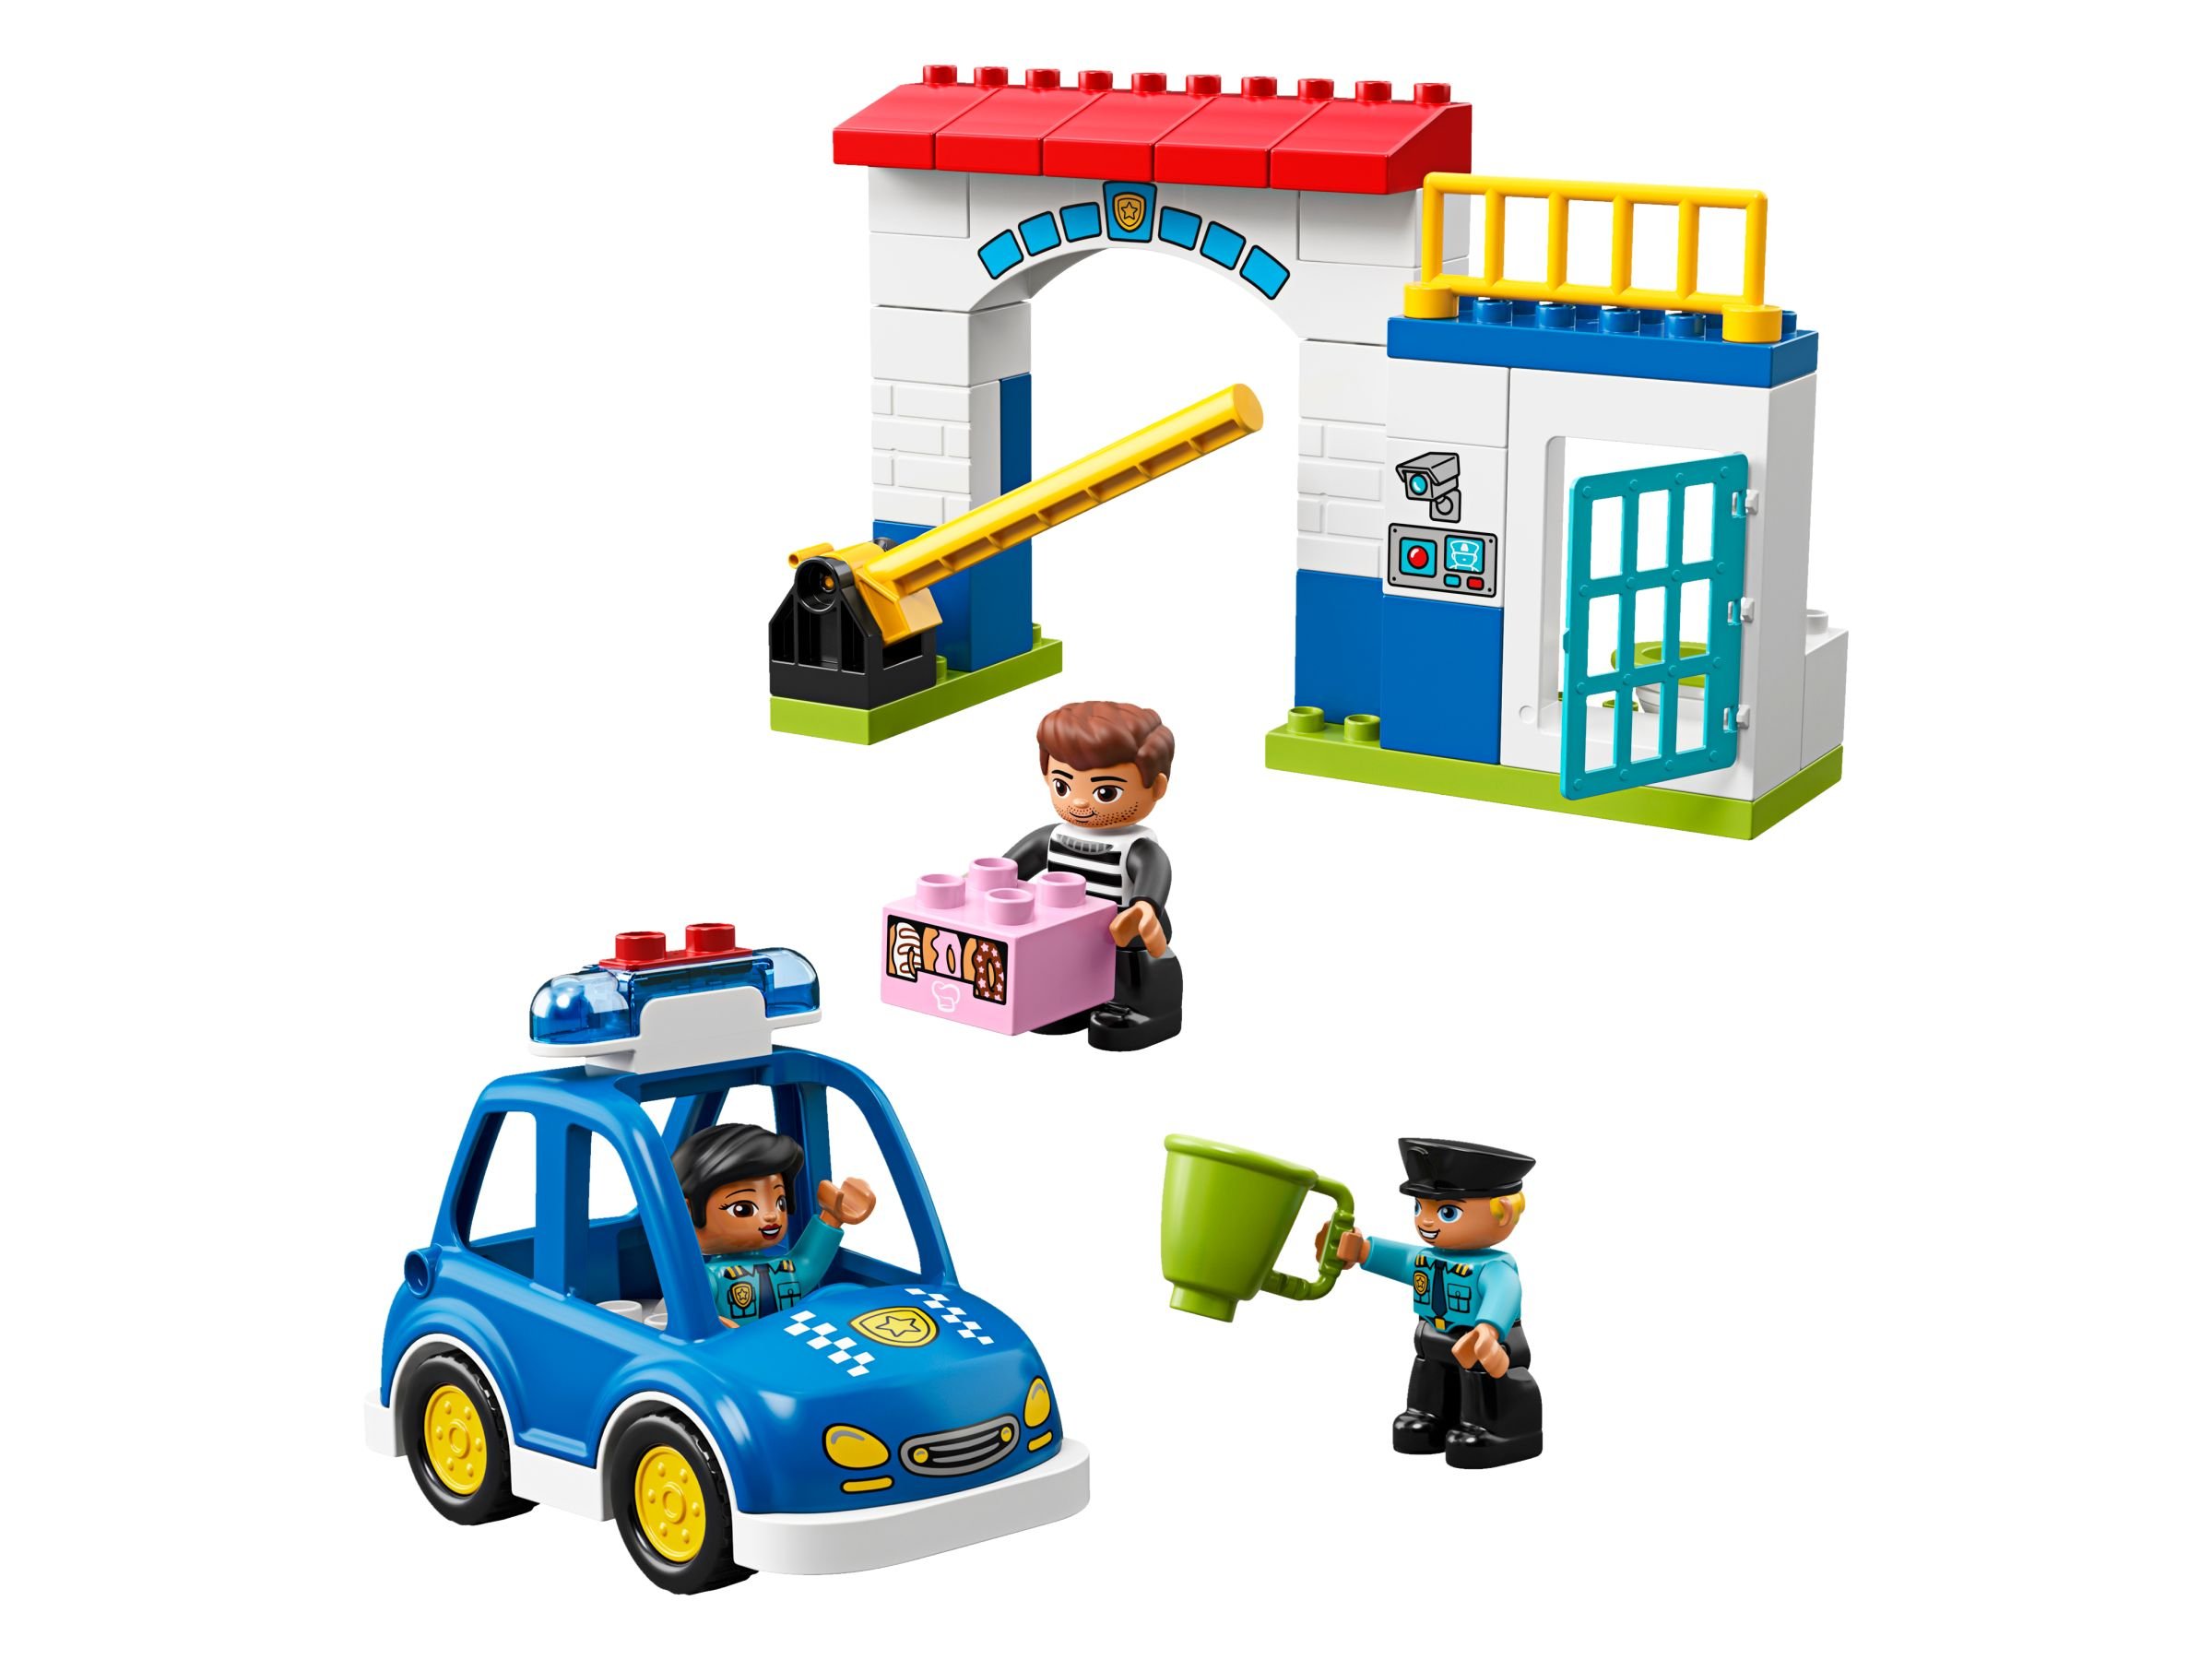 LEGO Duplo 10902 Polizeistation LEGO_10902.jpg